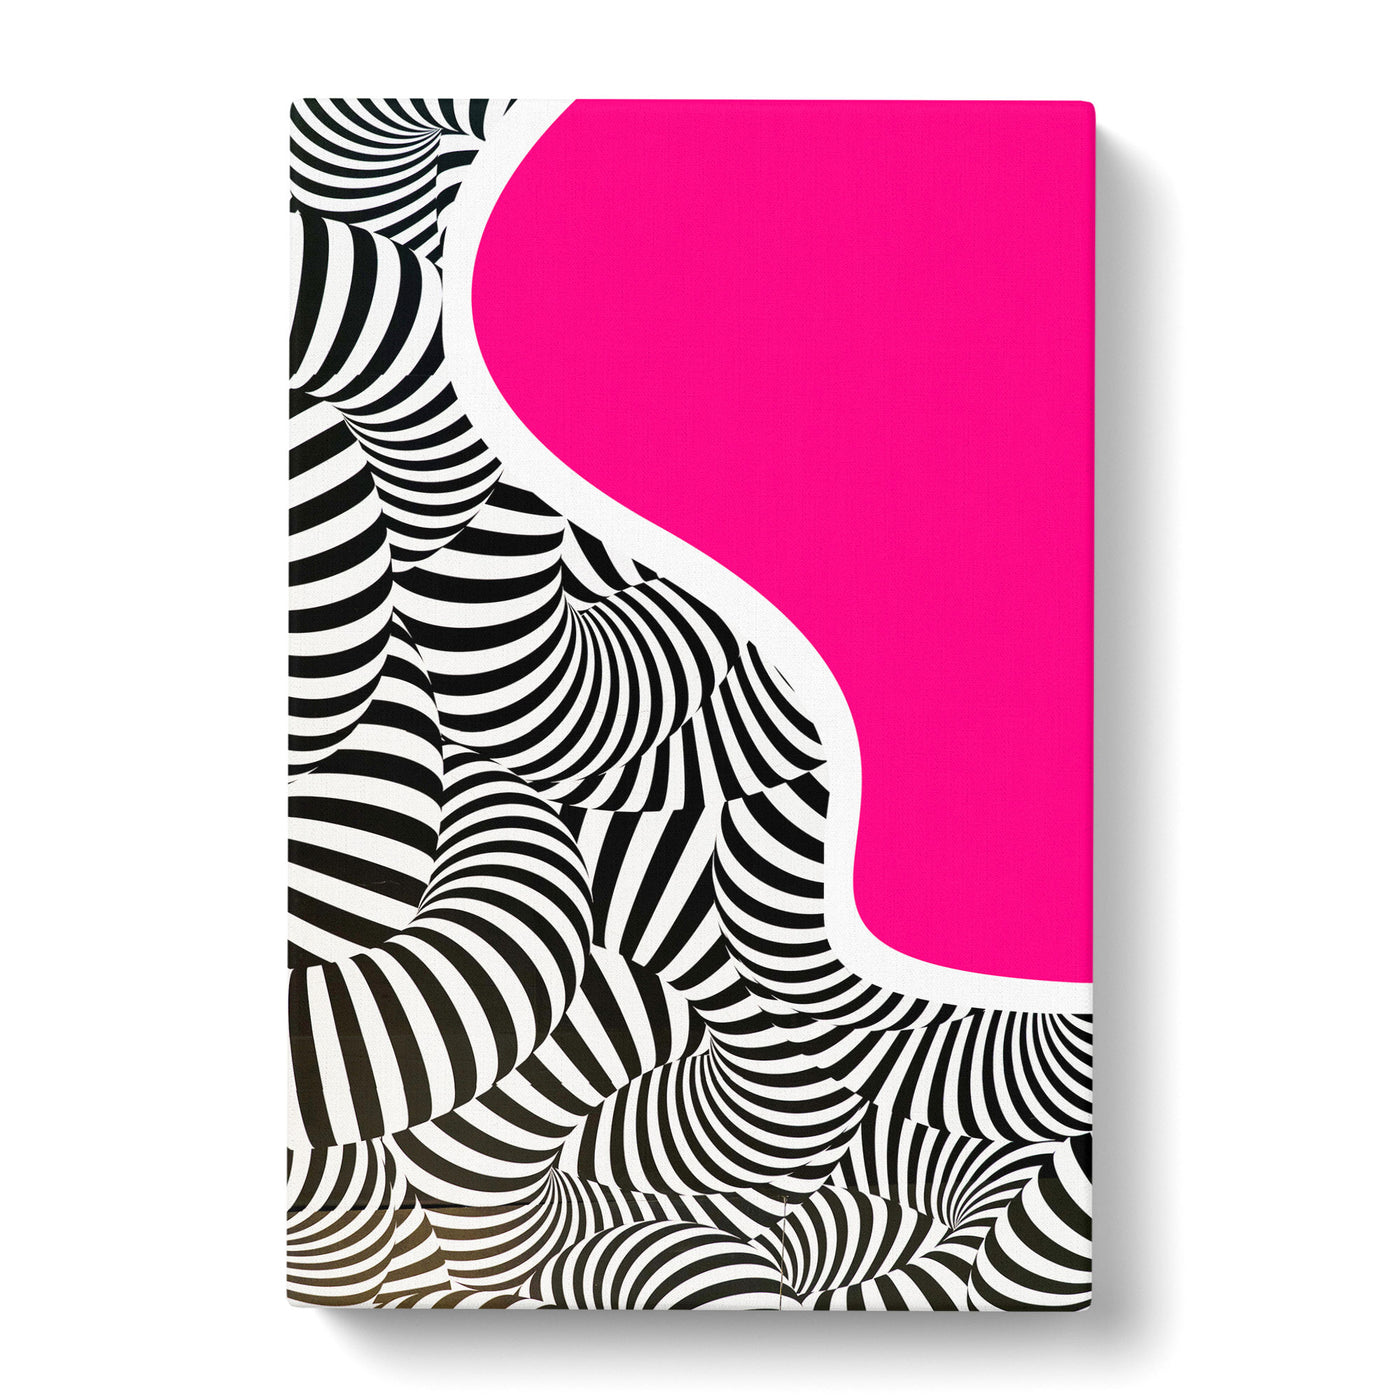 Abstract Zebra Lines No.2 Canvas Print Main Image